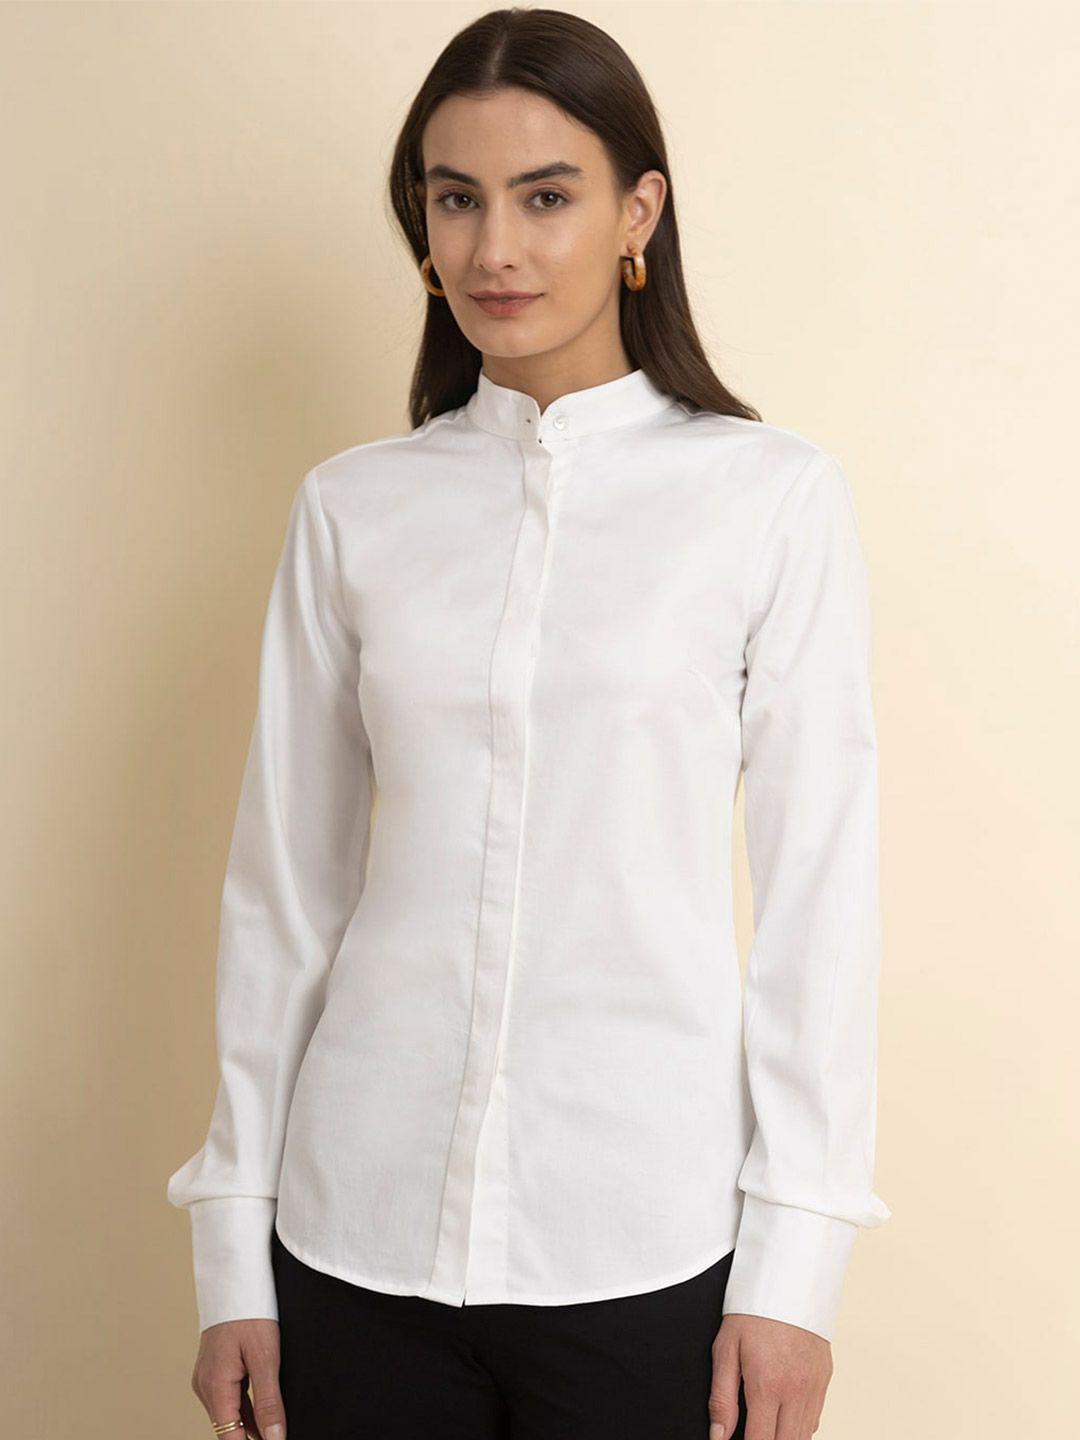 fablestreet-classic-mandarin-collar-slim-fit-cotton-casual-shirt